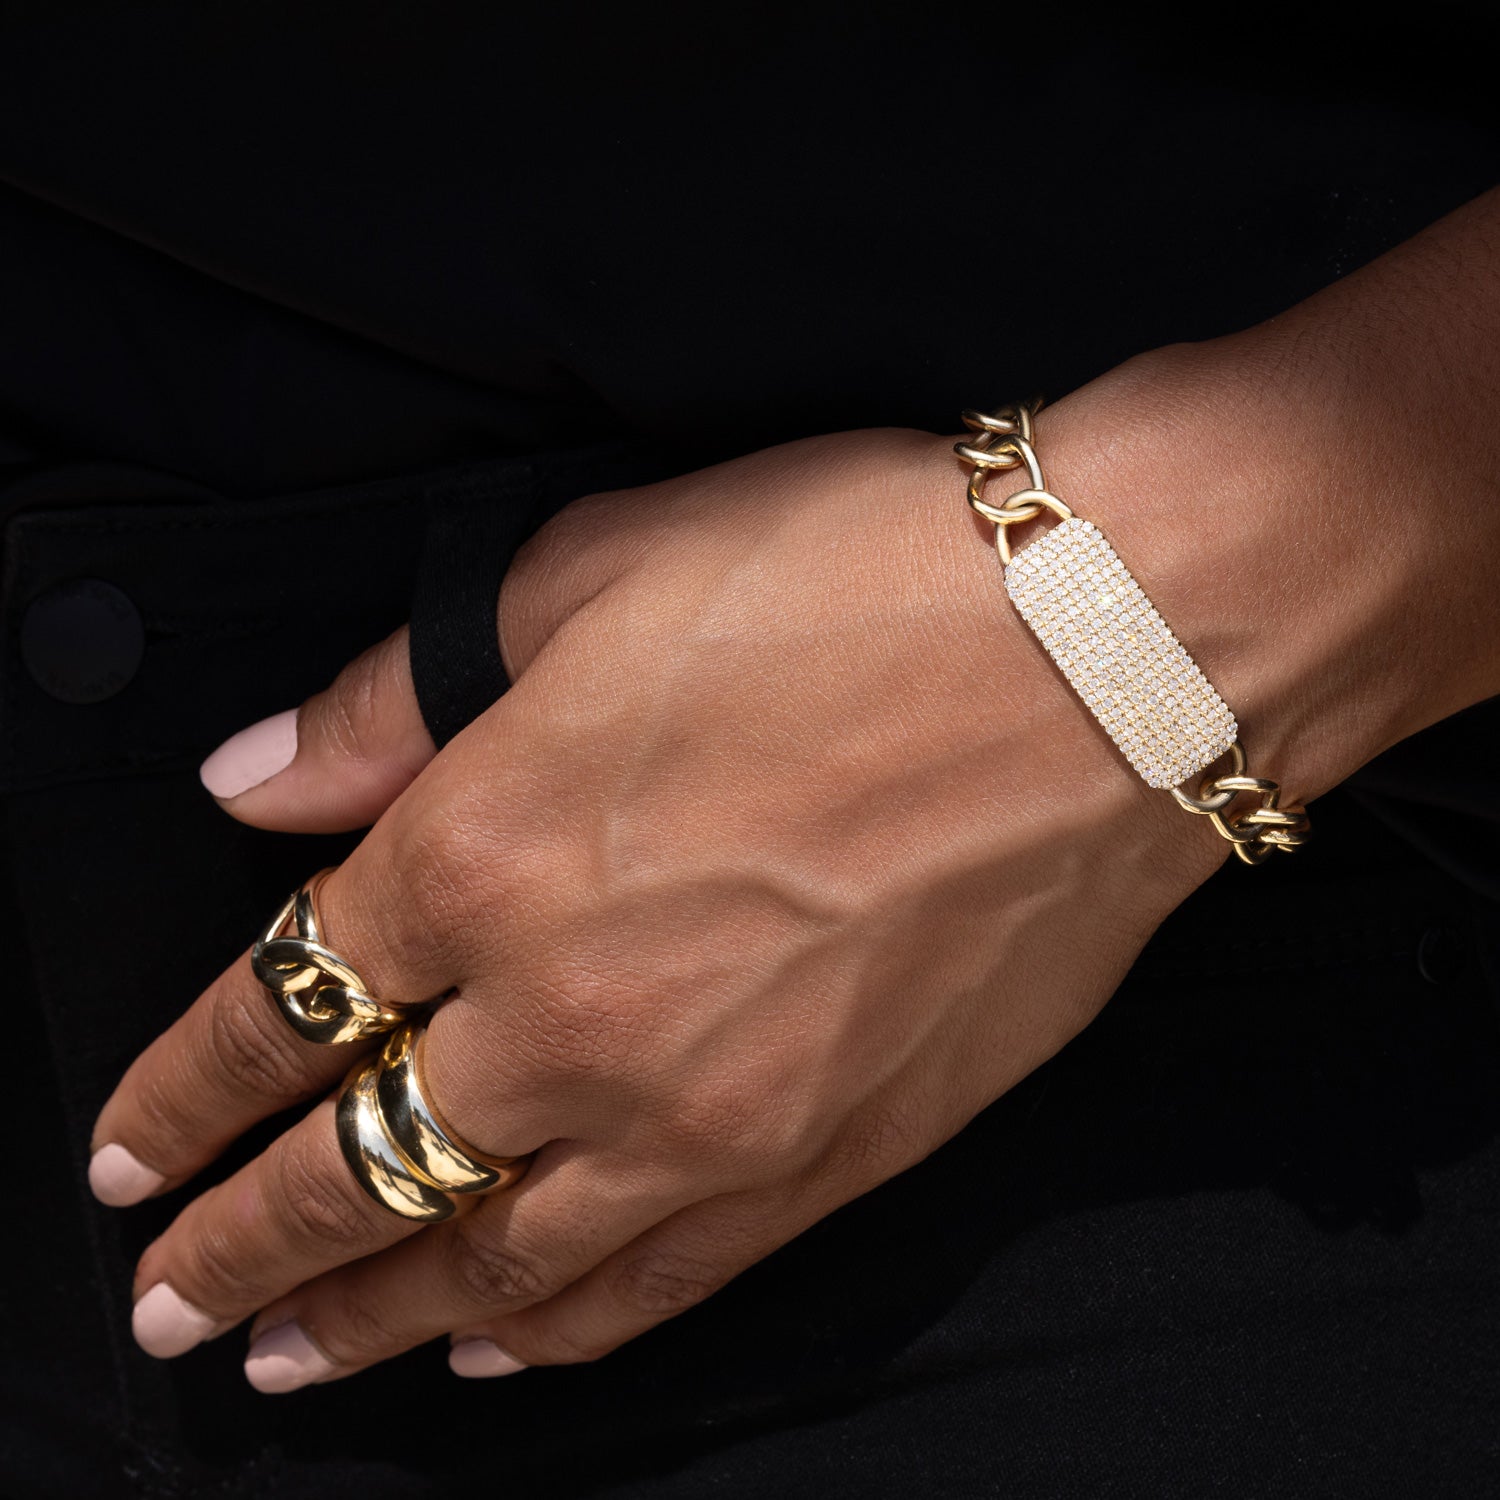 Buy Dainty Gold Bracelets for Women, 14K Gold Filled Adjustable Layered  Bracelet Cute Evil Eye Oval Chain Pearl Bar Turtle Gold Bracelets for Women  Jewelry, Metal at Amazon.in